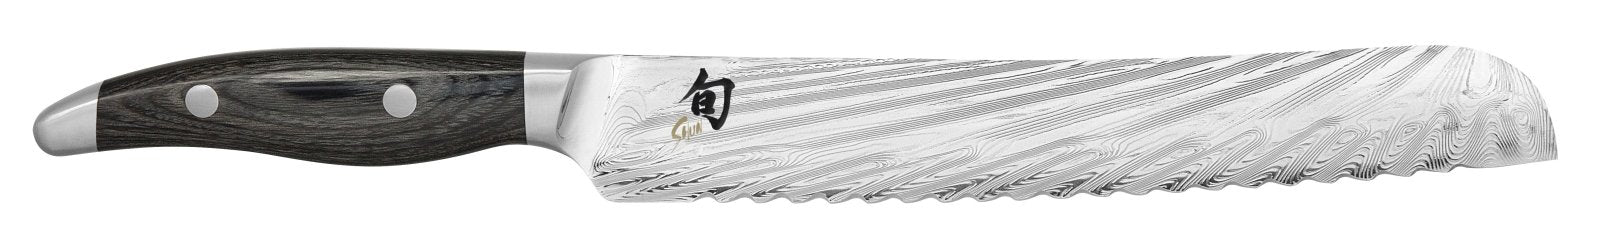 KAI Shun Nagare 23cm Bread Knife - KAI-NDC-0705 - The Cotswold Knife Company